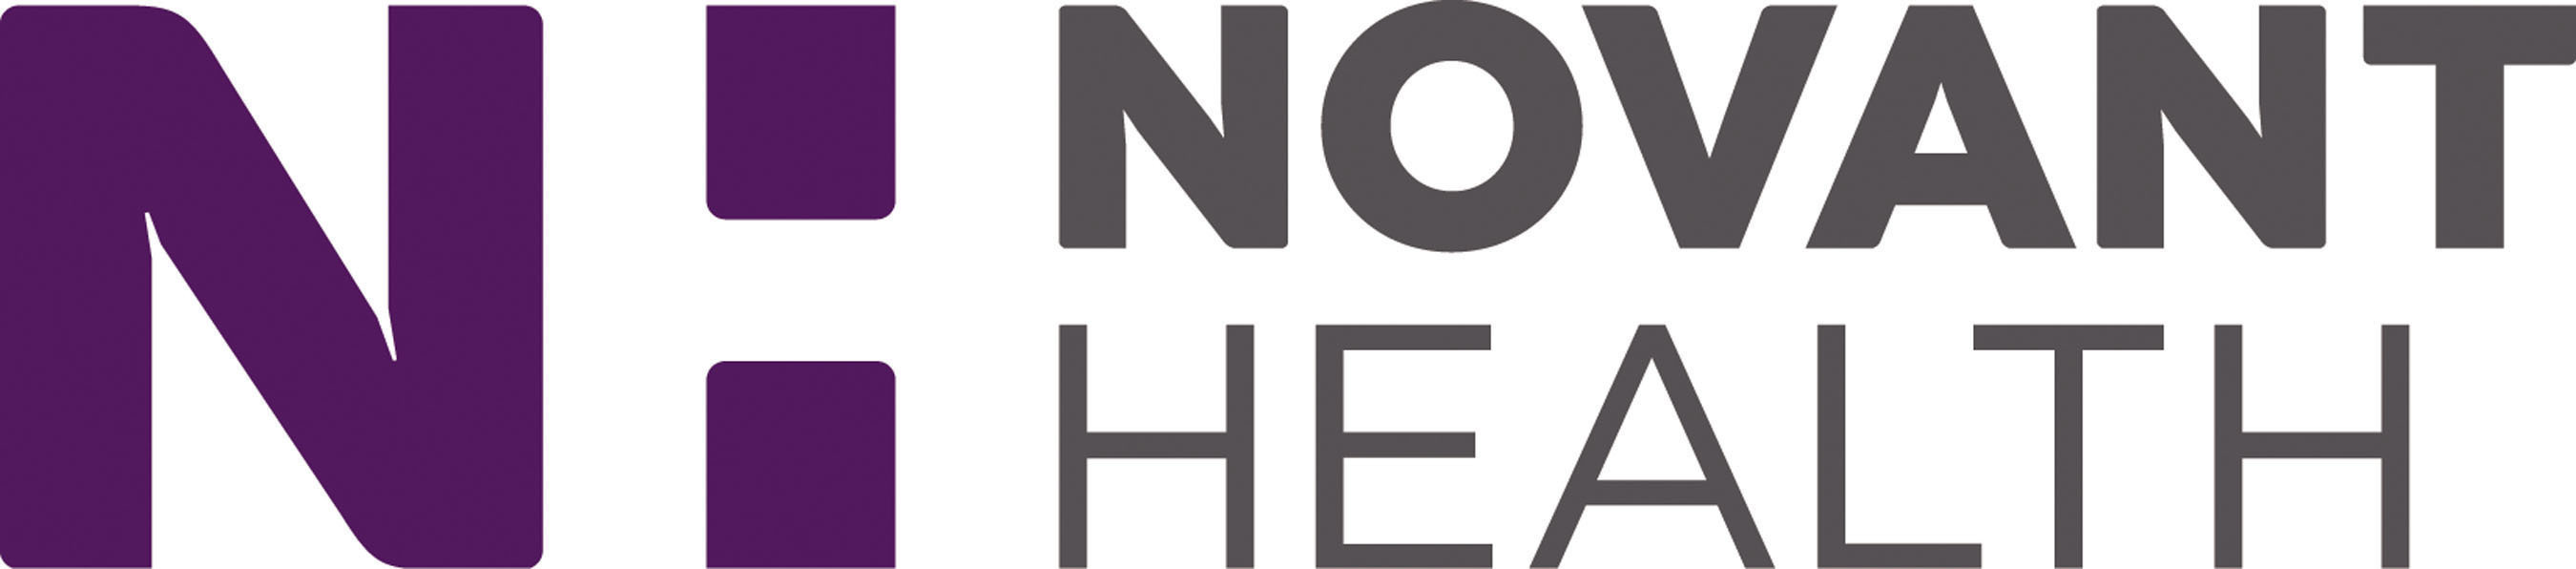 Based in Winston-Salem, North Carolina, Novant Health provides care at 14 medical centers. (PRNewsFoto/Novant Health) (PRNewsFoto/NOVANT HEALTH)